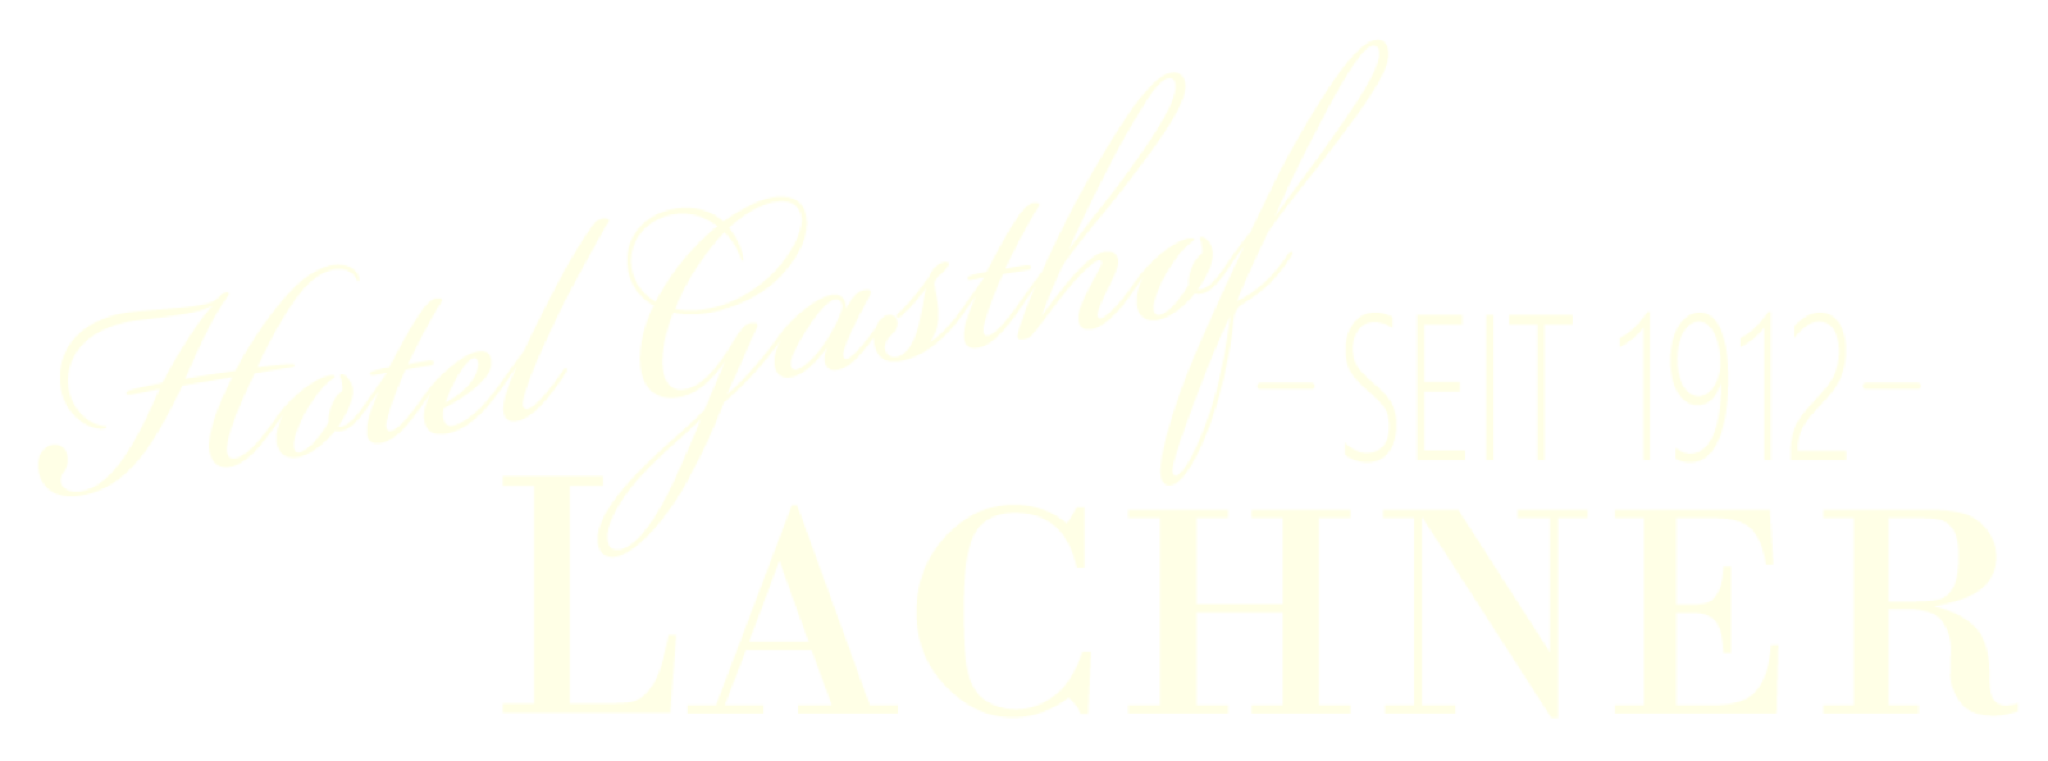 Logo Lachner